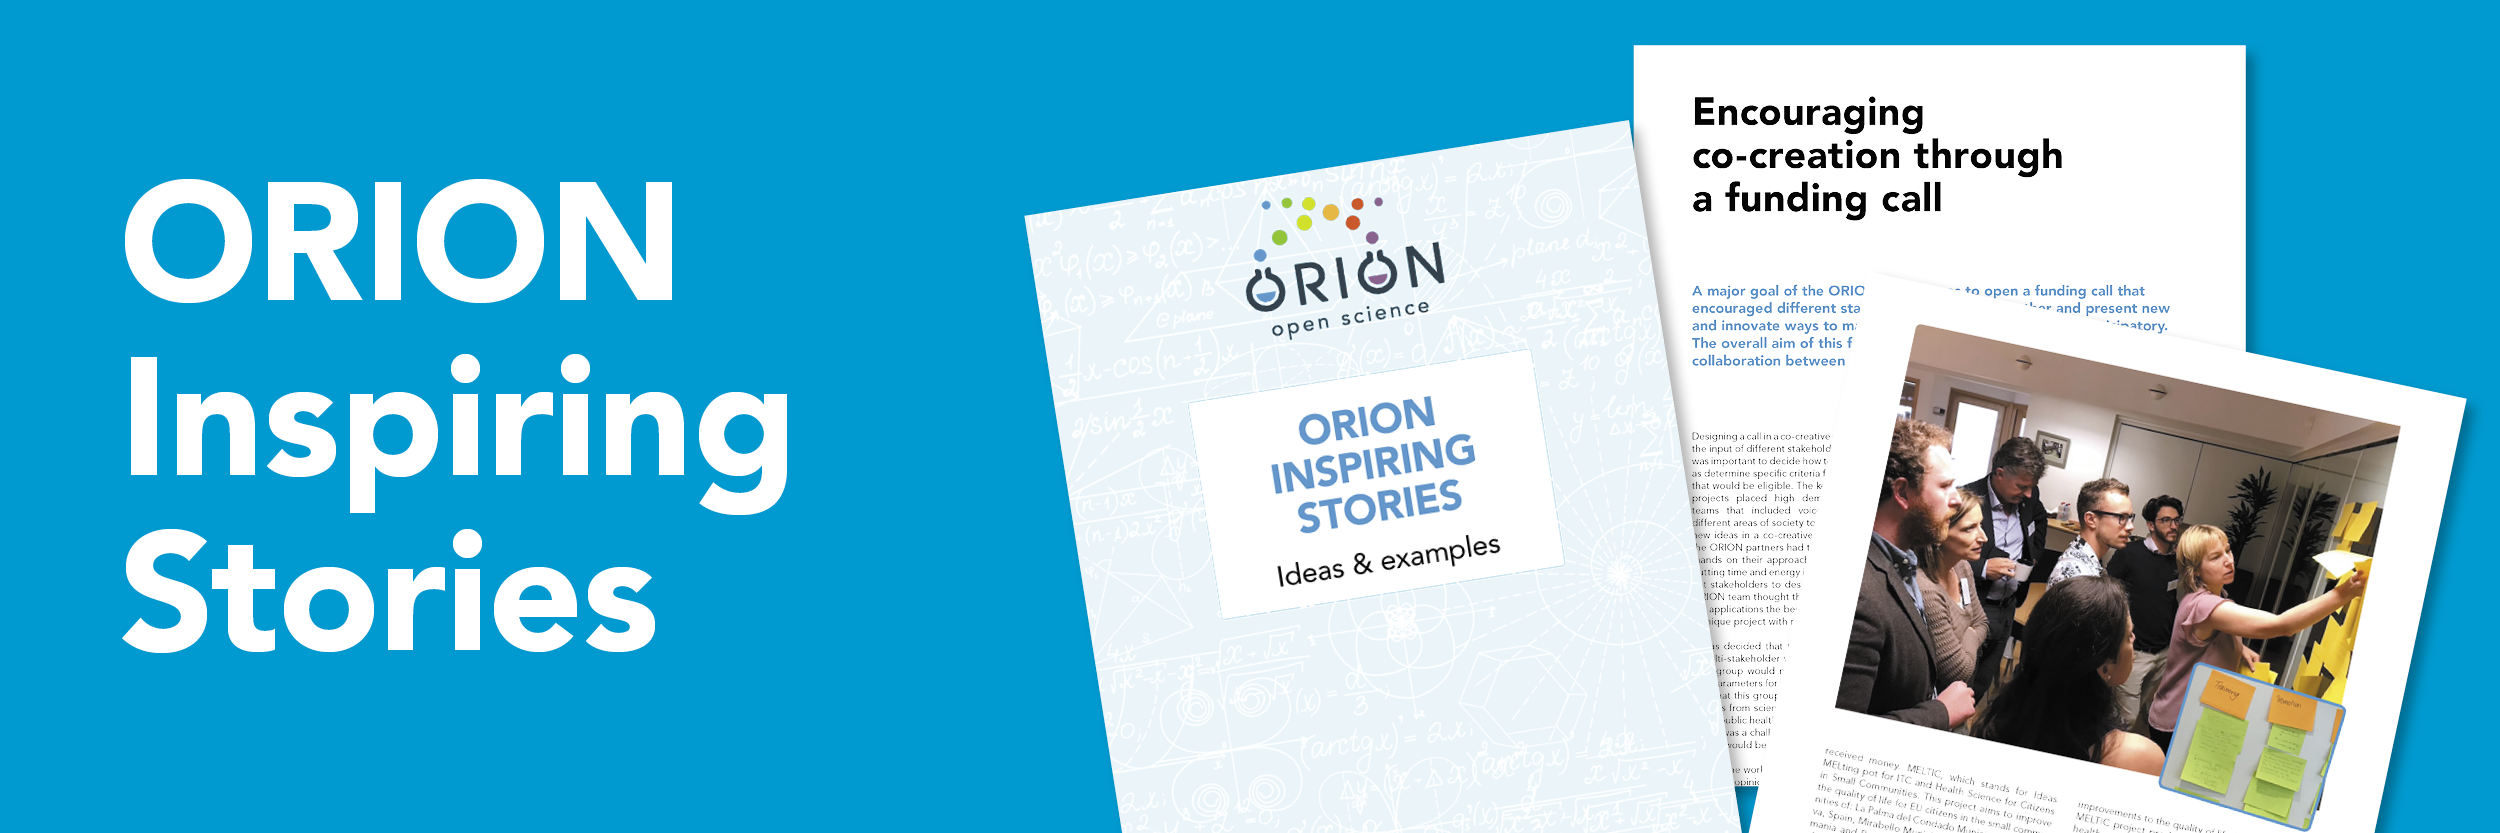 ORION Inspiring Stories